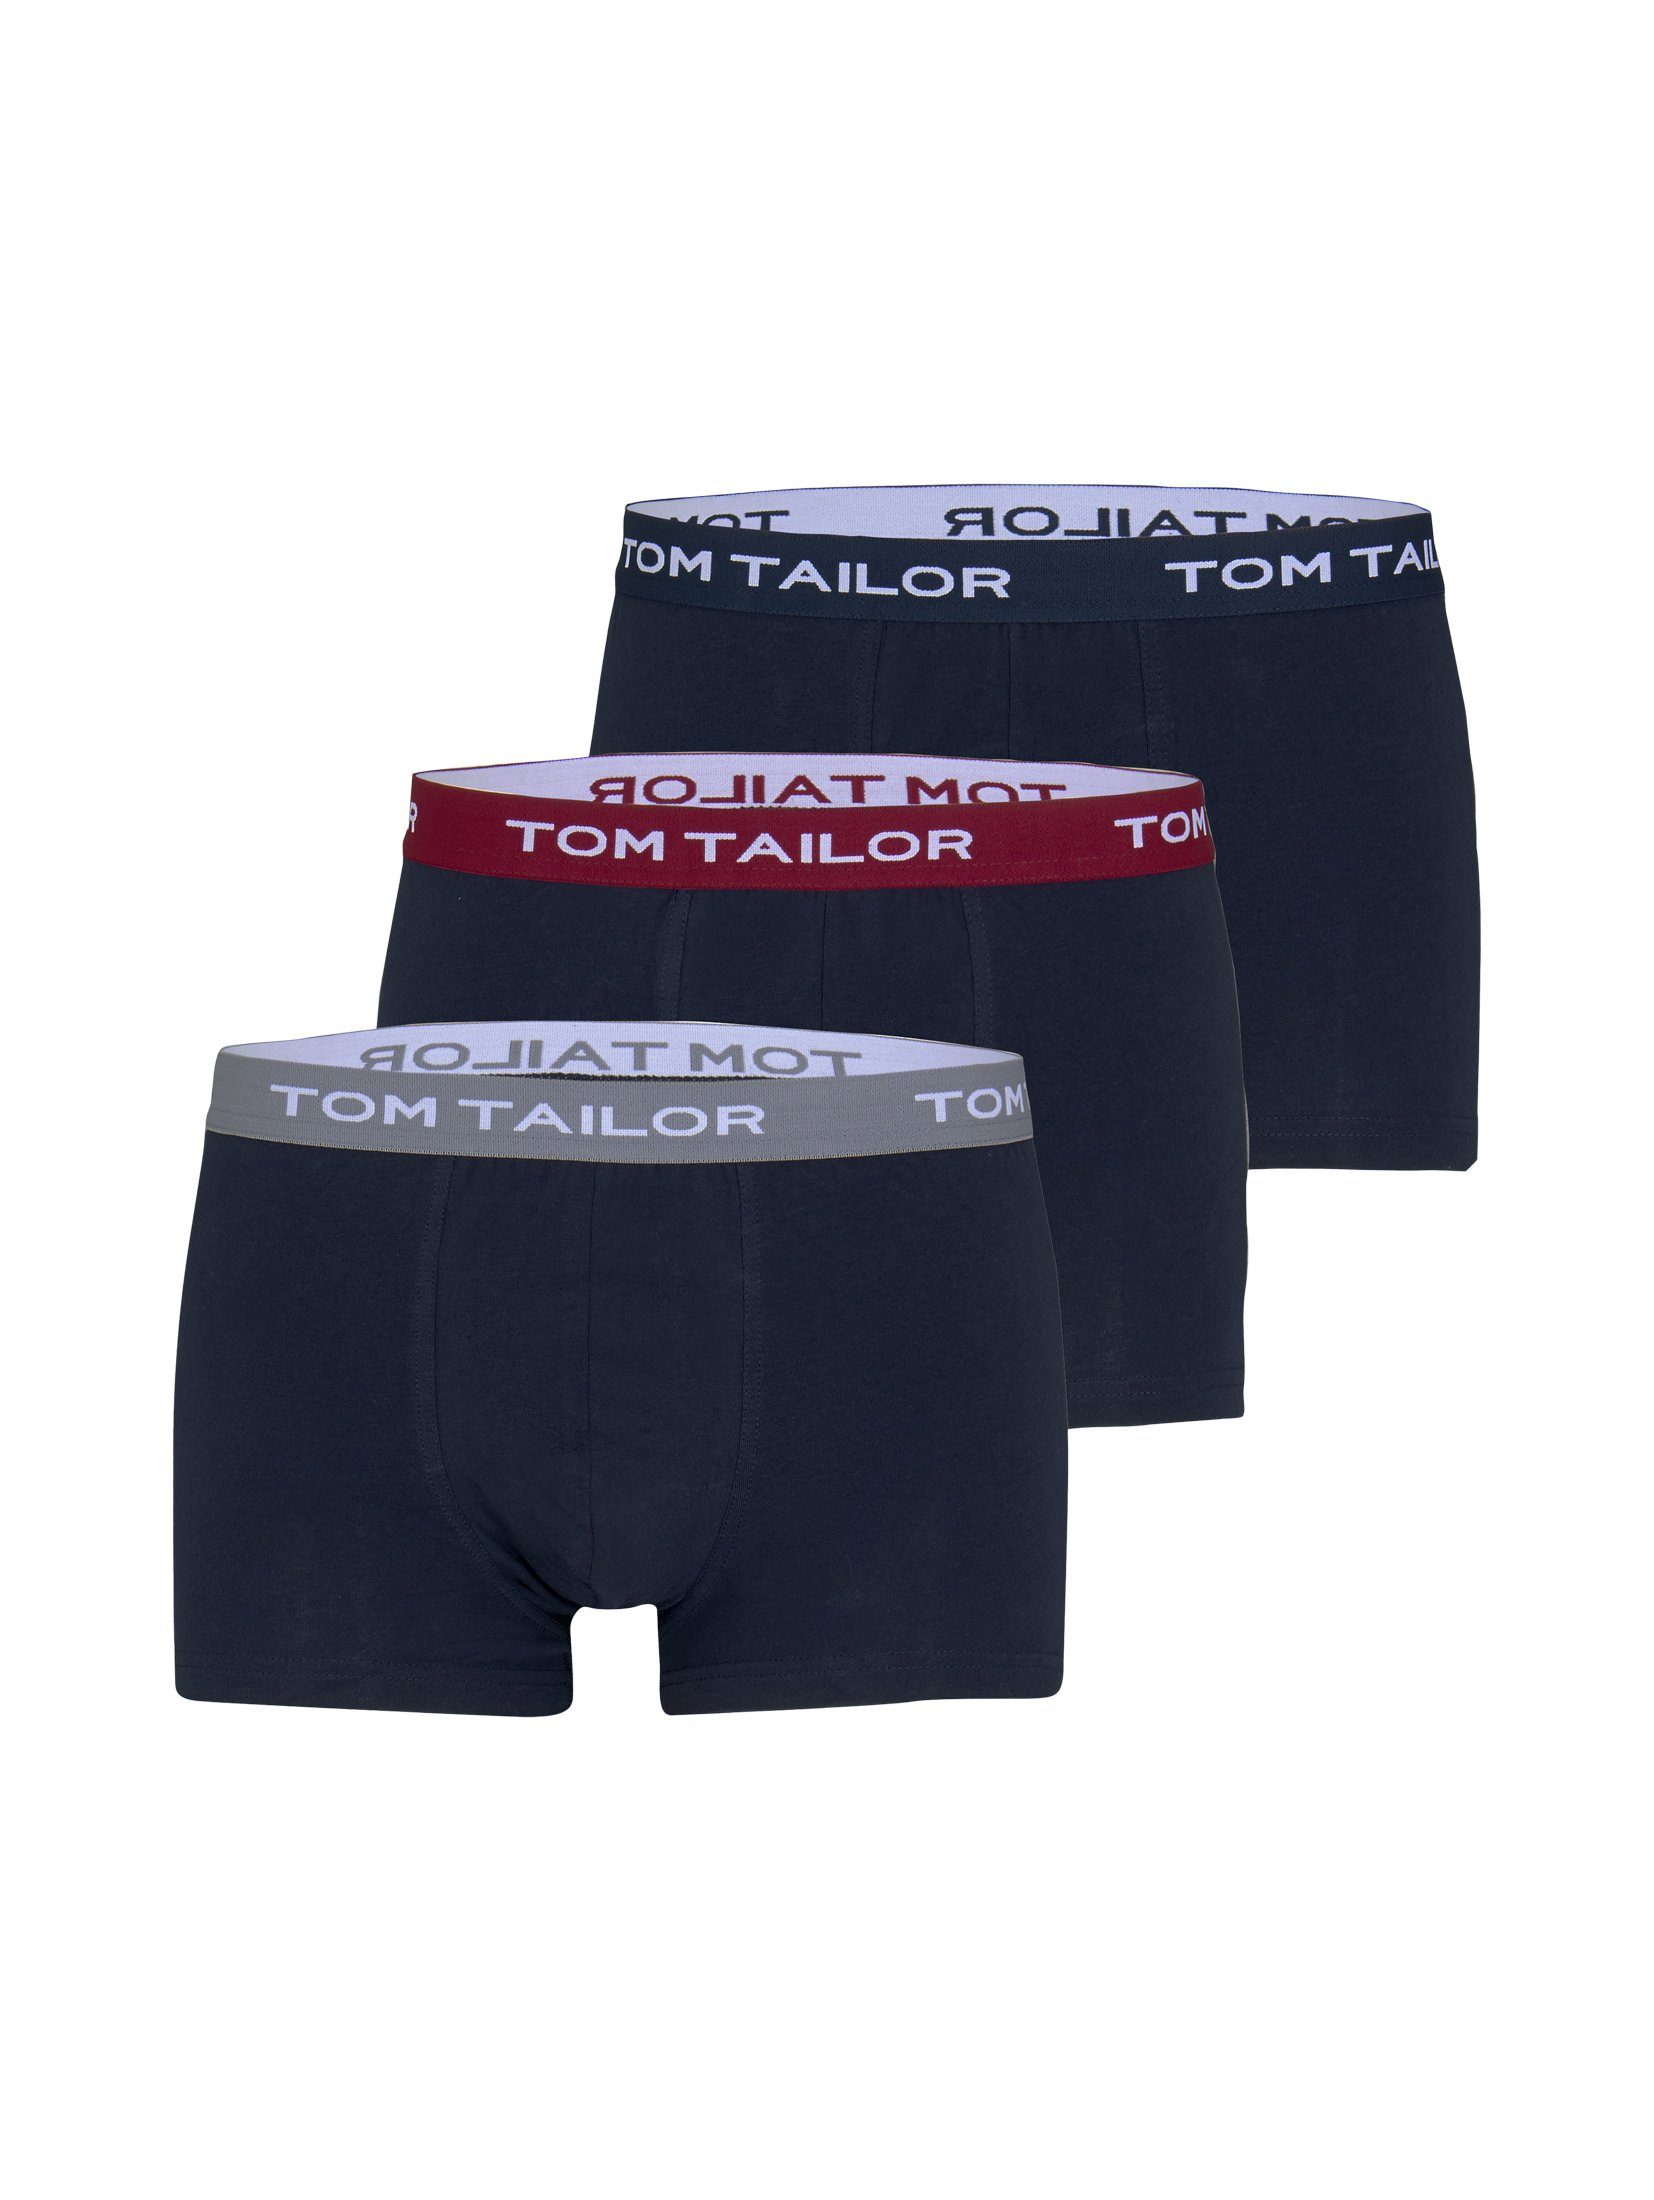 TOM TAILOR Boxershorts Hip-Pants dark im Dreierpack multi (im Dreierpack) blue